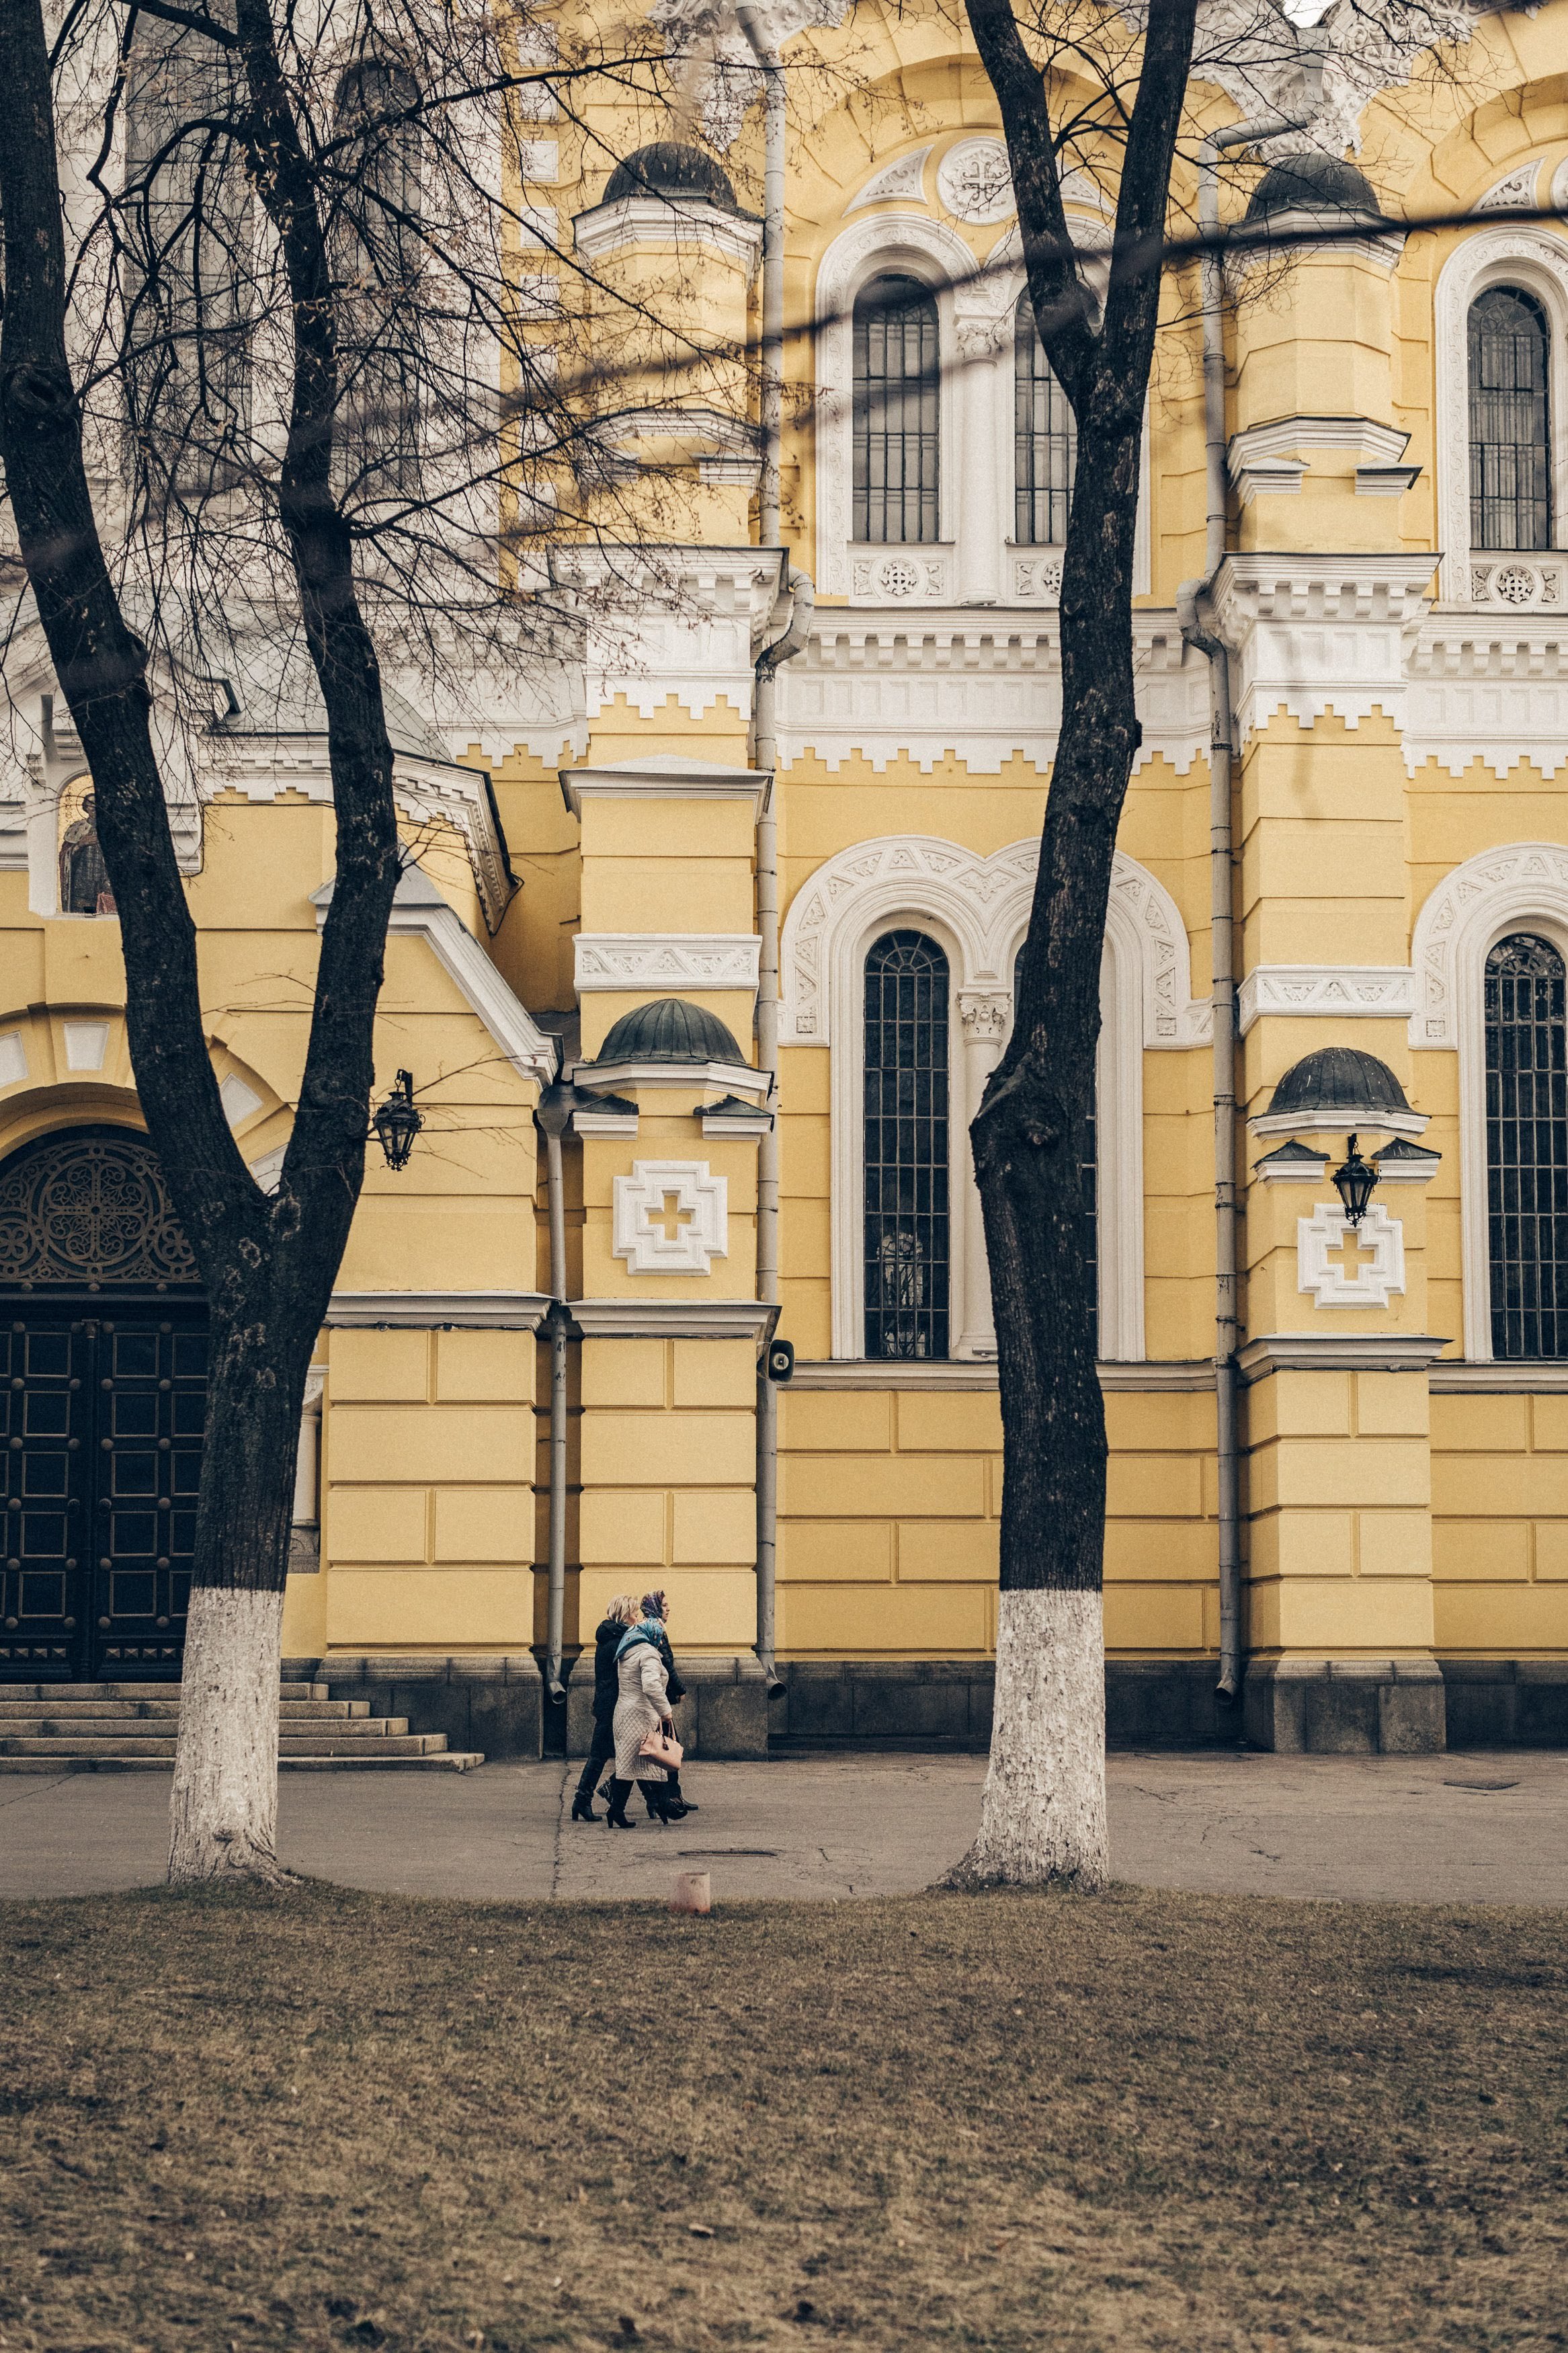 2019-3-8 Kiev, Urkaine - Jack Robert Photography (15 of 42).jpg